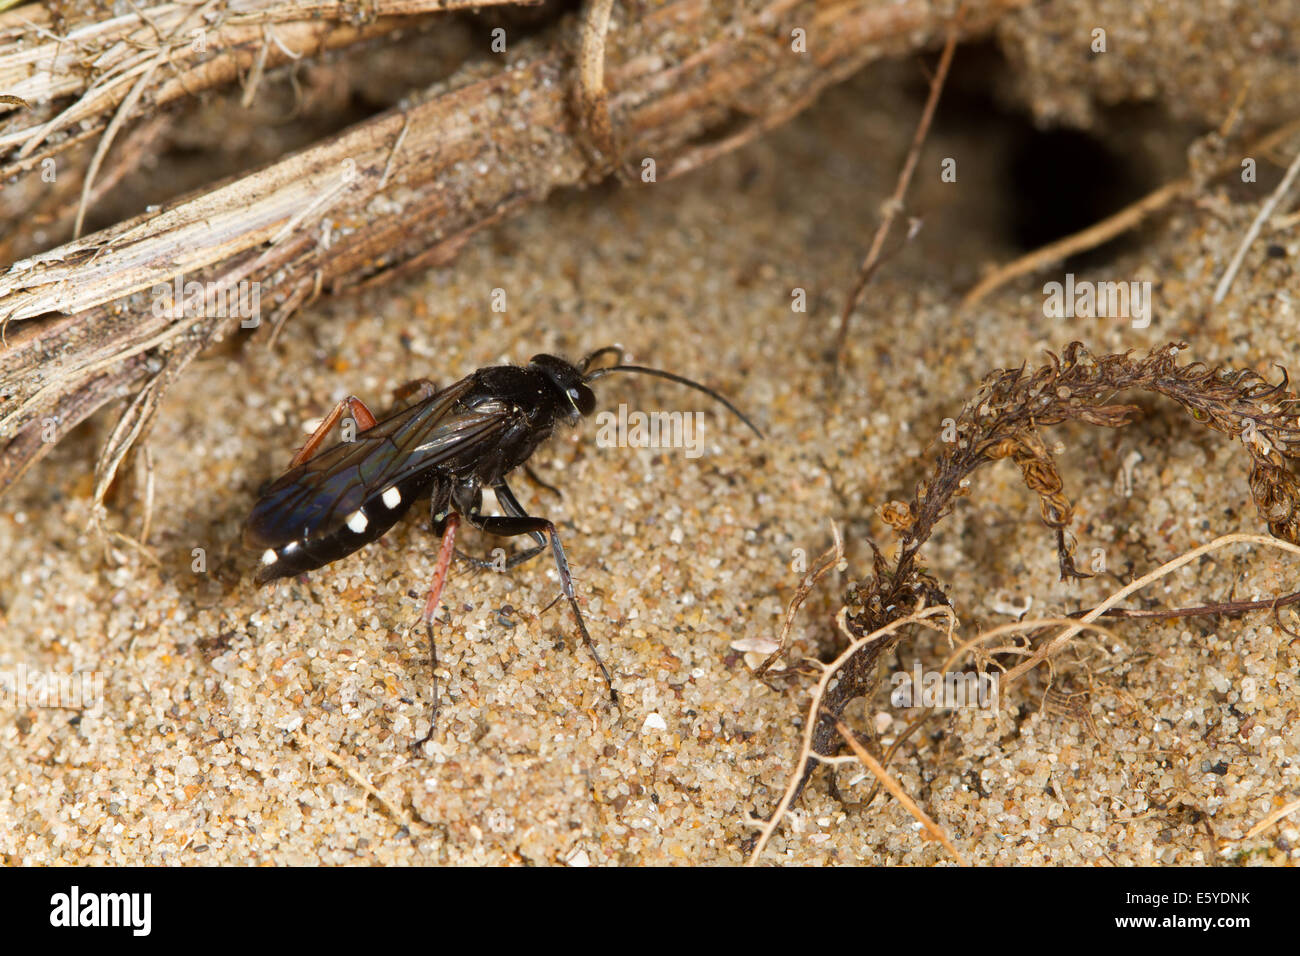 Red-legged Spider Wasp (Episyron rufipes) entering its burrow Stock Photo